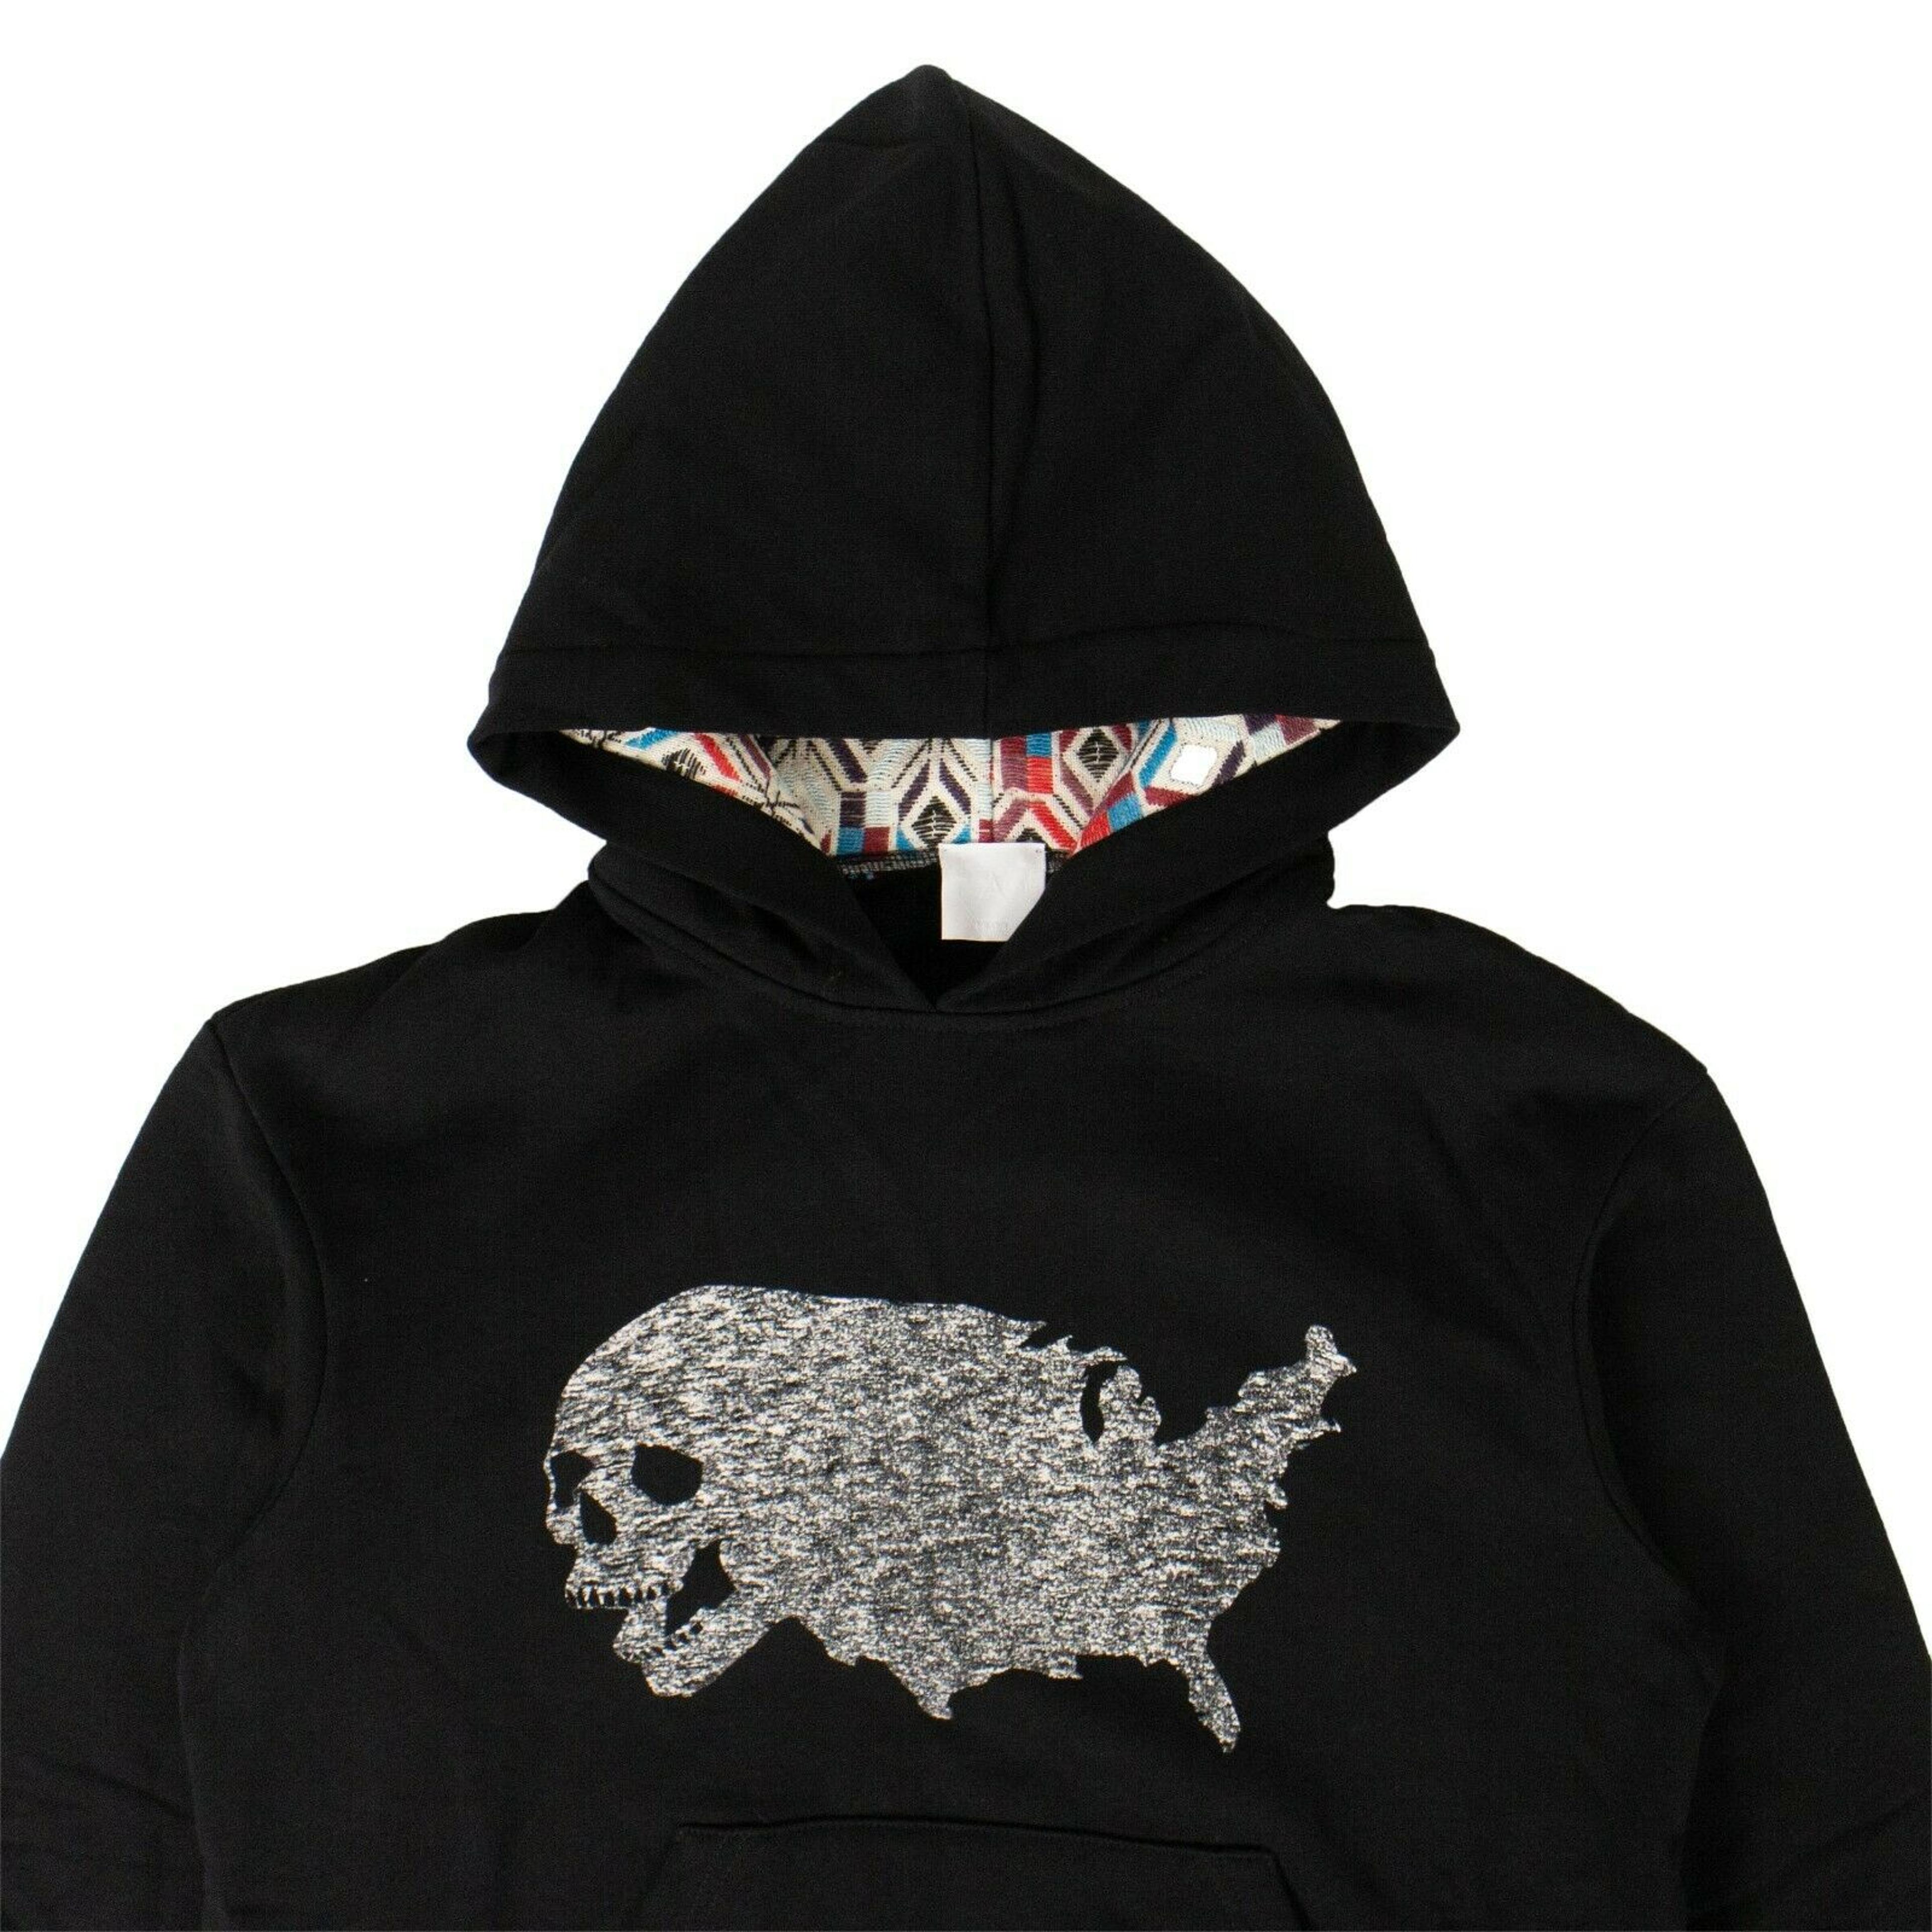 Alternate View 2 of Alchemist Skull Evlis Faded Hoodie Sweatshirt - Black